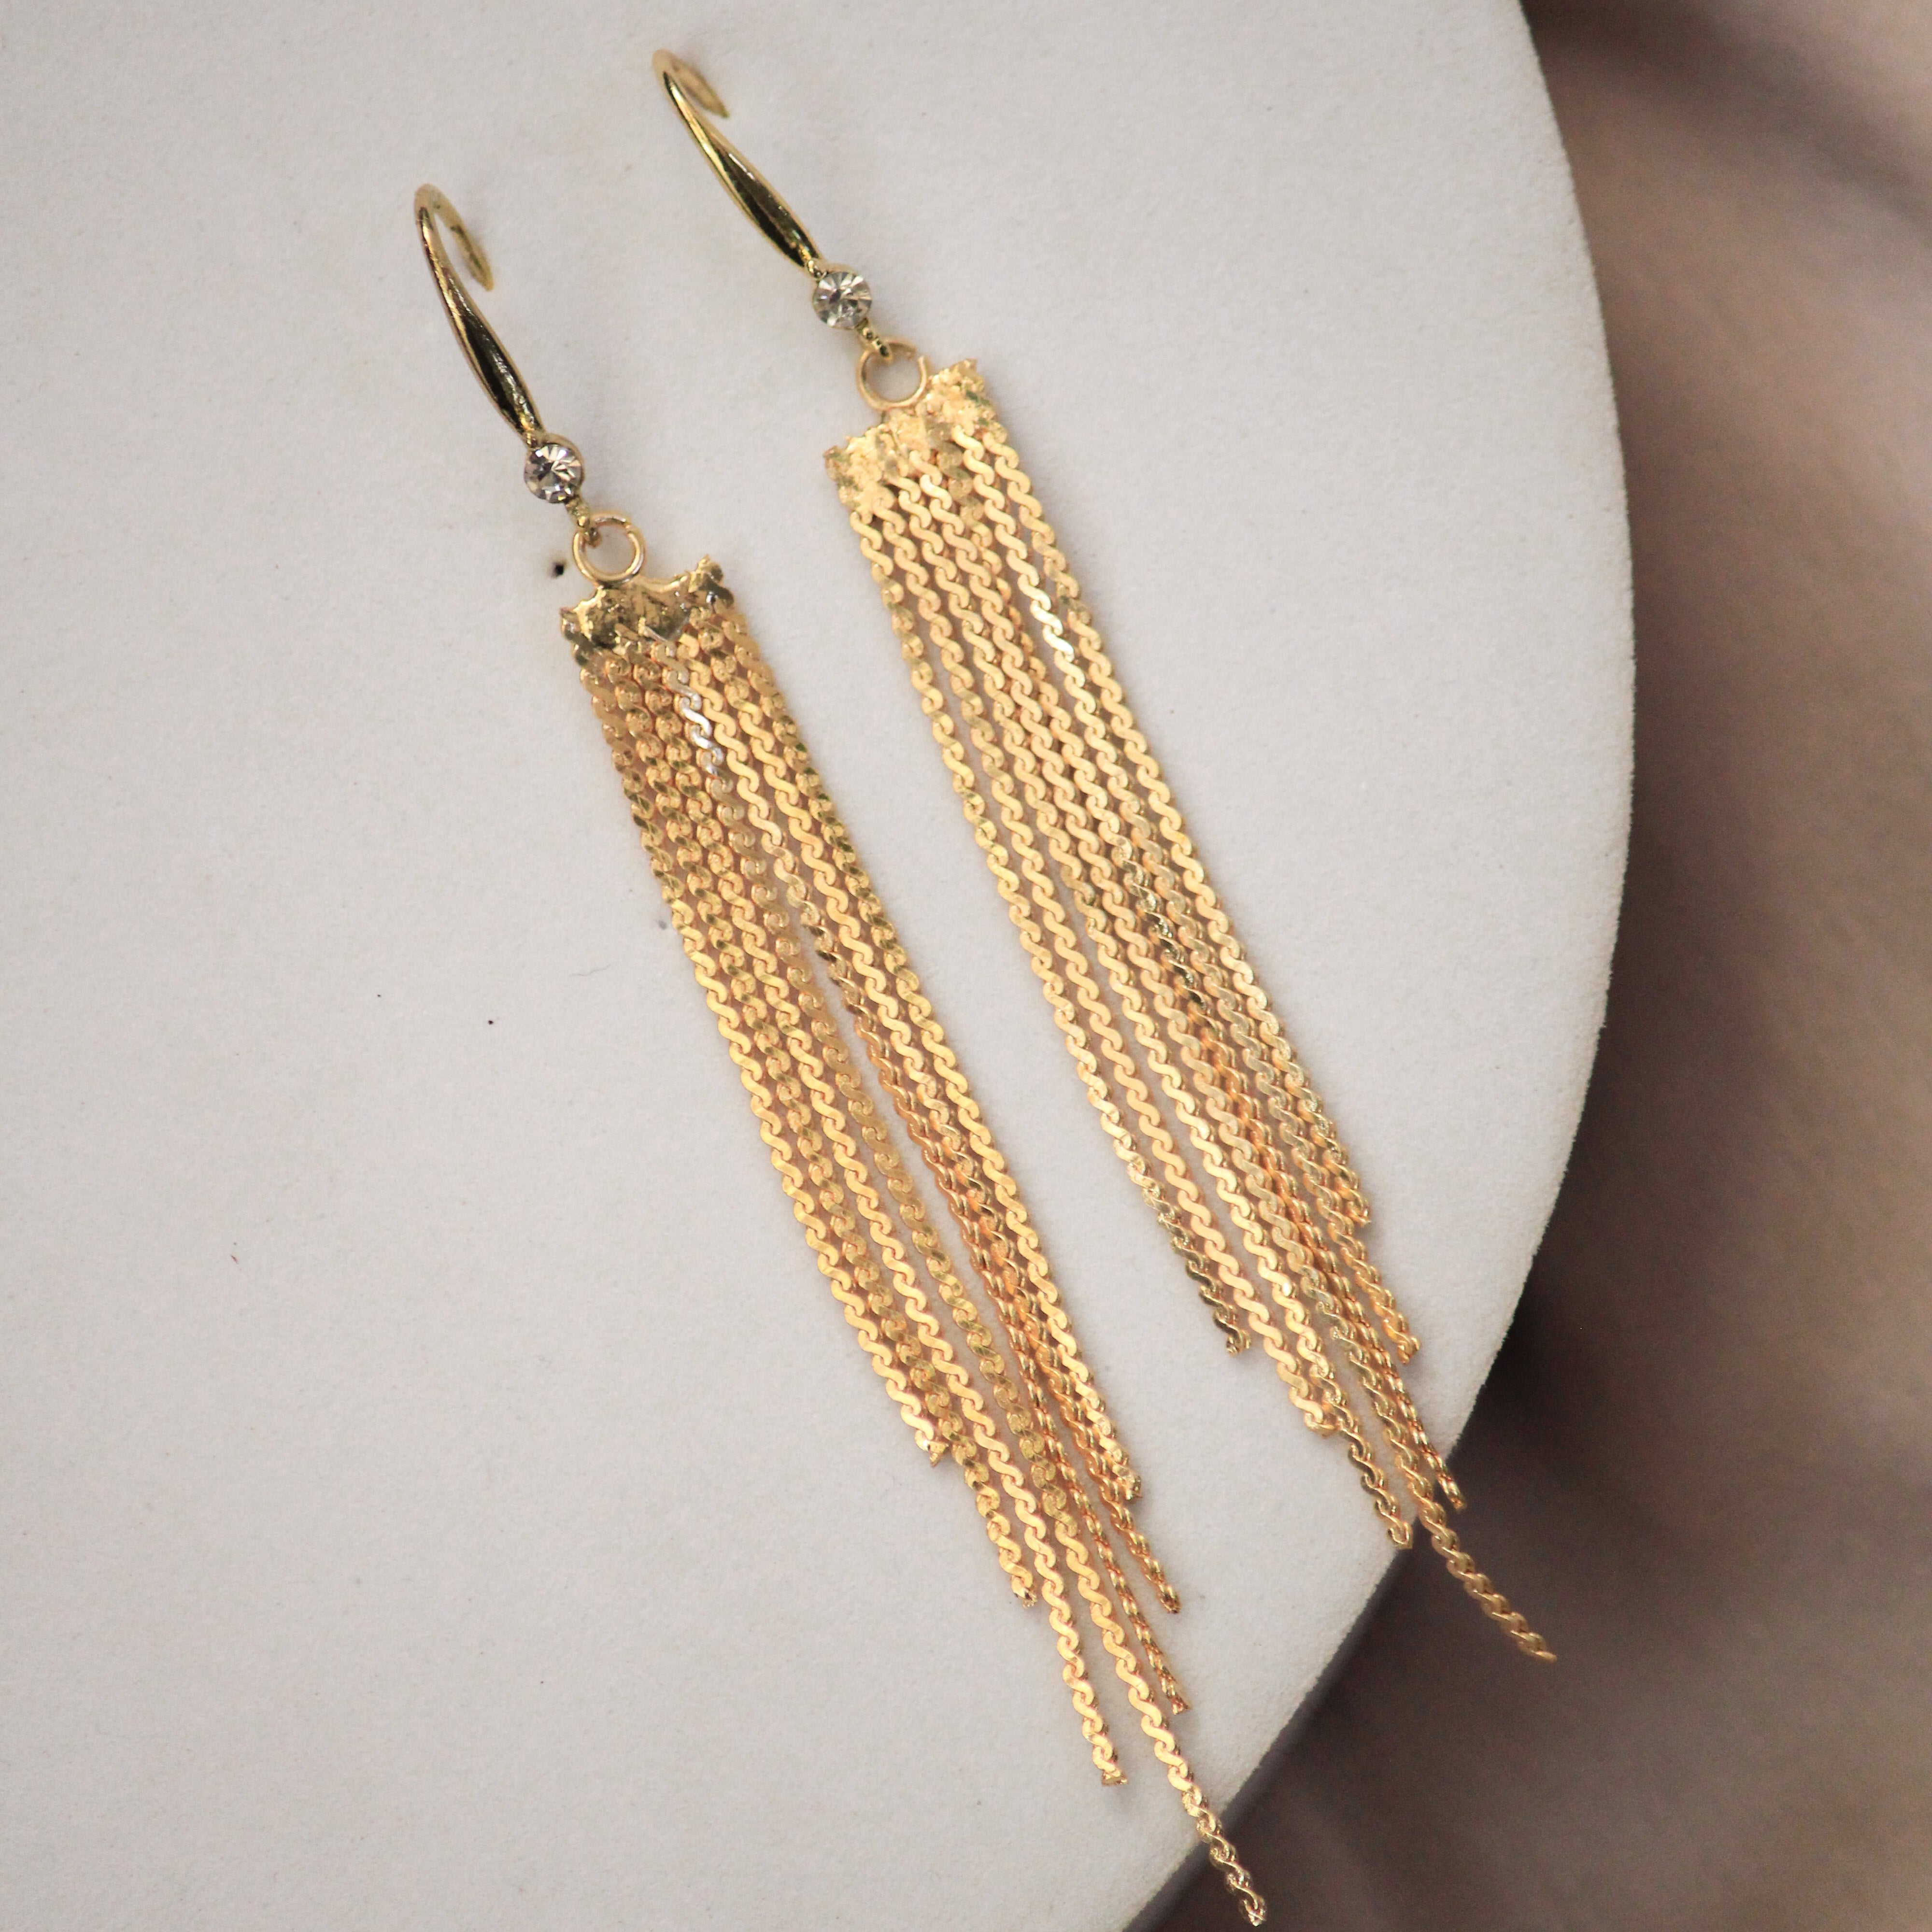 Buy Chandelier Earrings Online in India  Amazing Designs  Best Price   Candere by Kalyan Jewellers